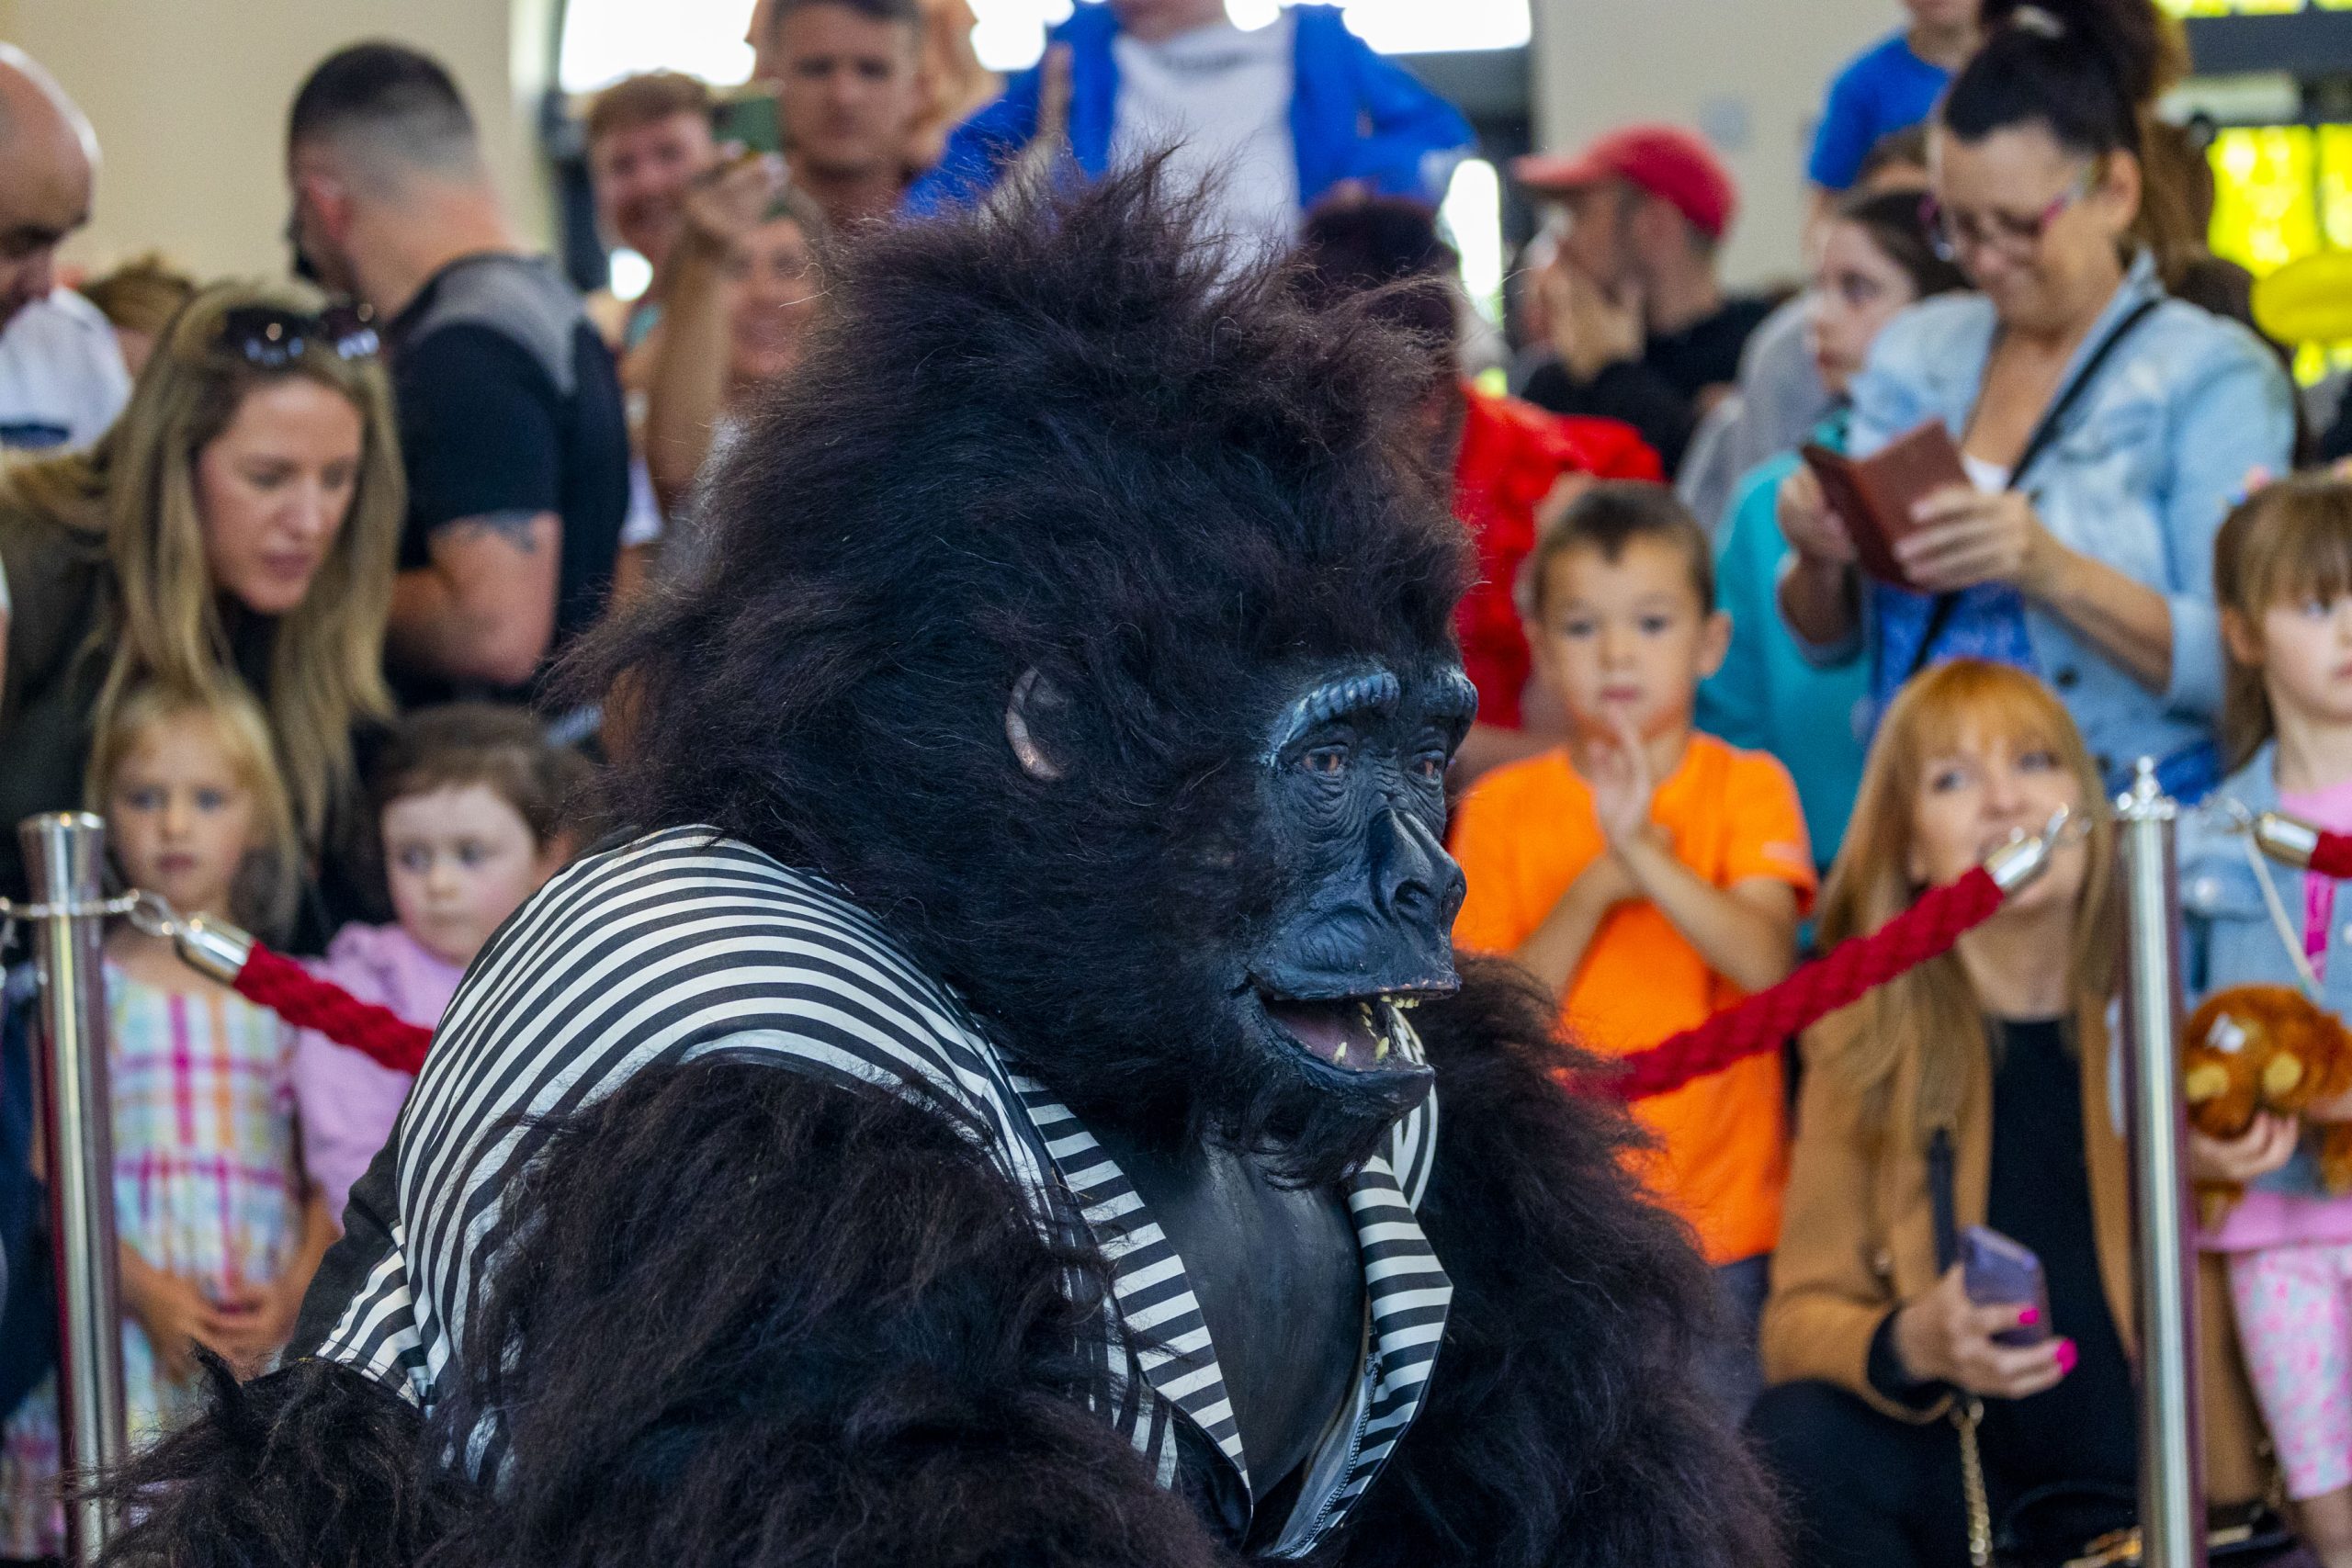 Gorilla from Marshes Giant Gorilla Escape event